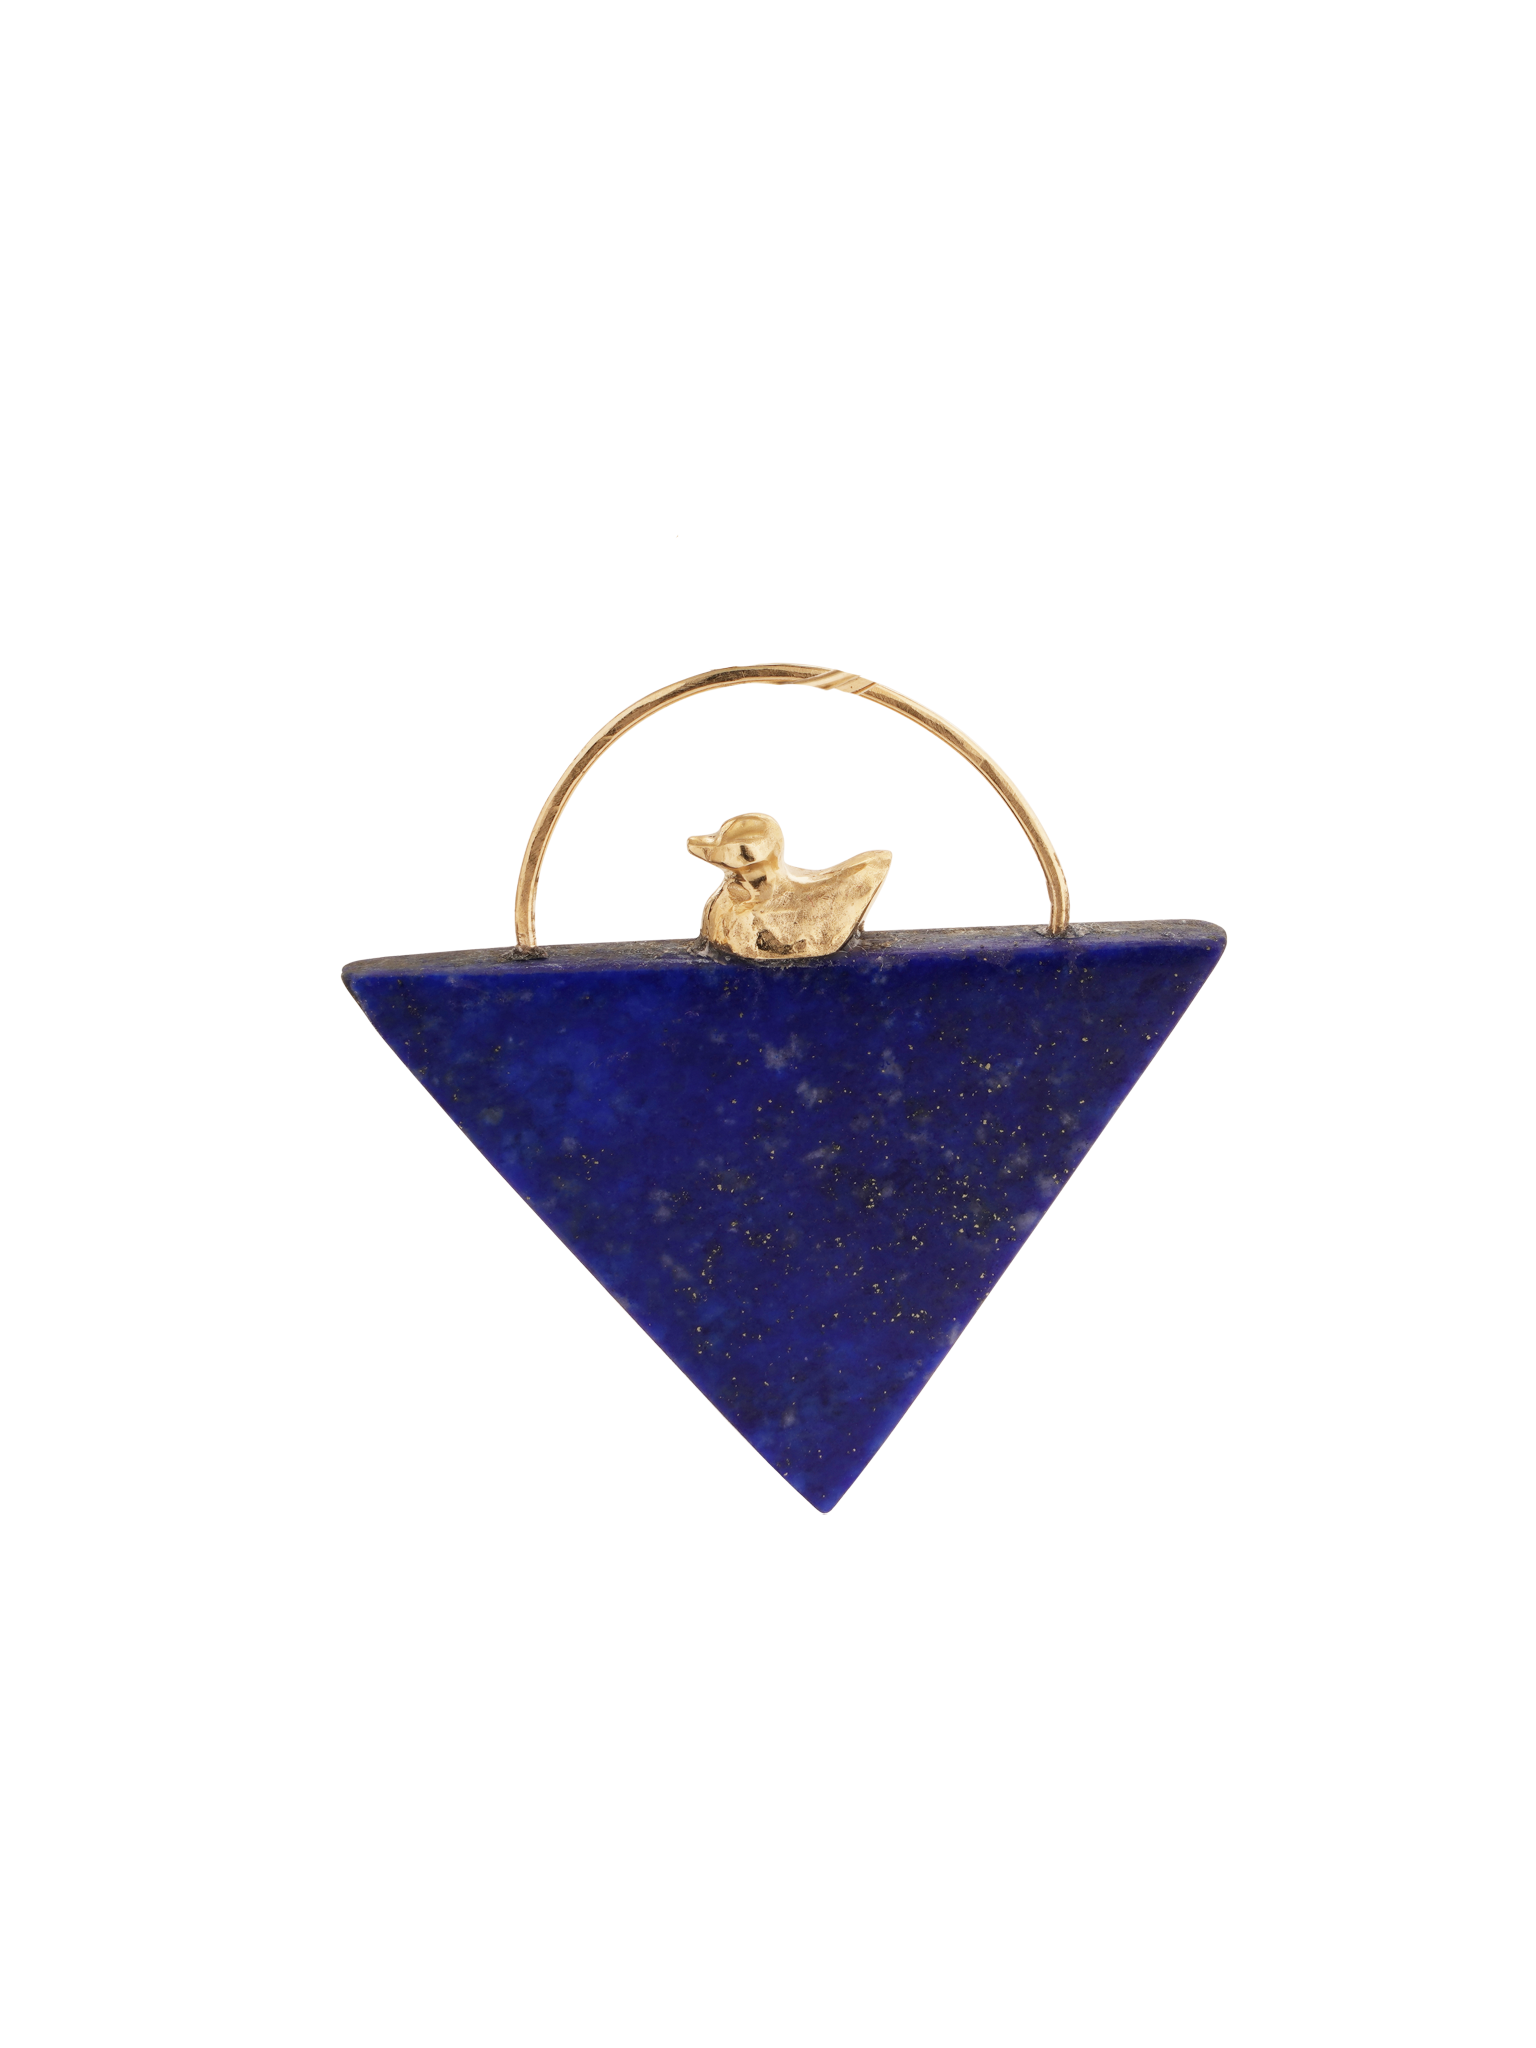 Penelope duckling pendant, 9ct gold on lapis